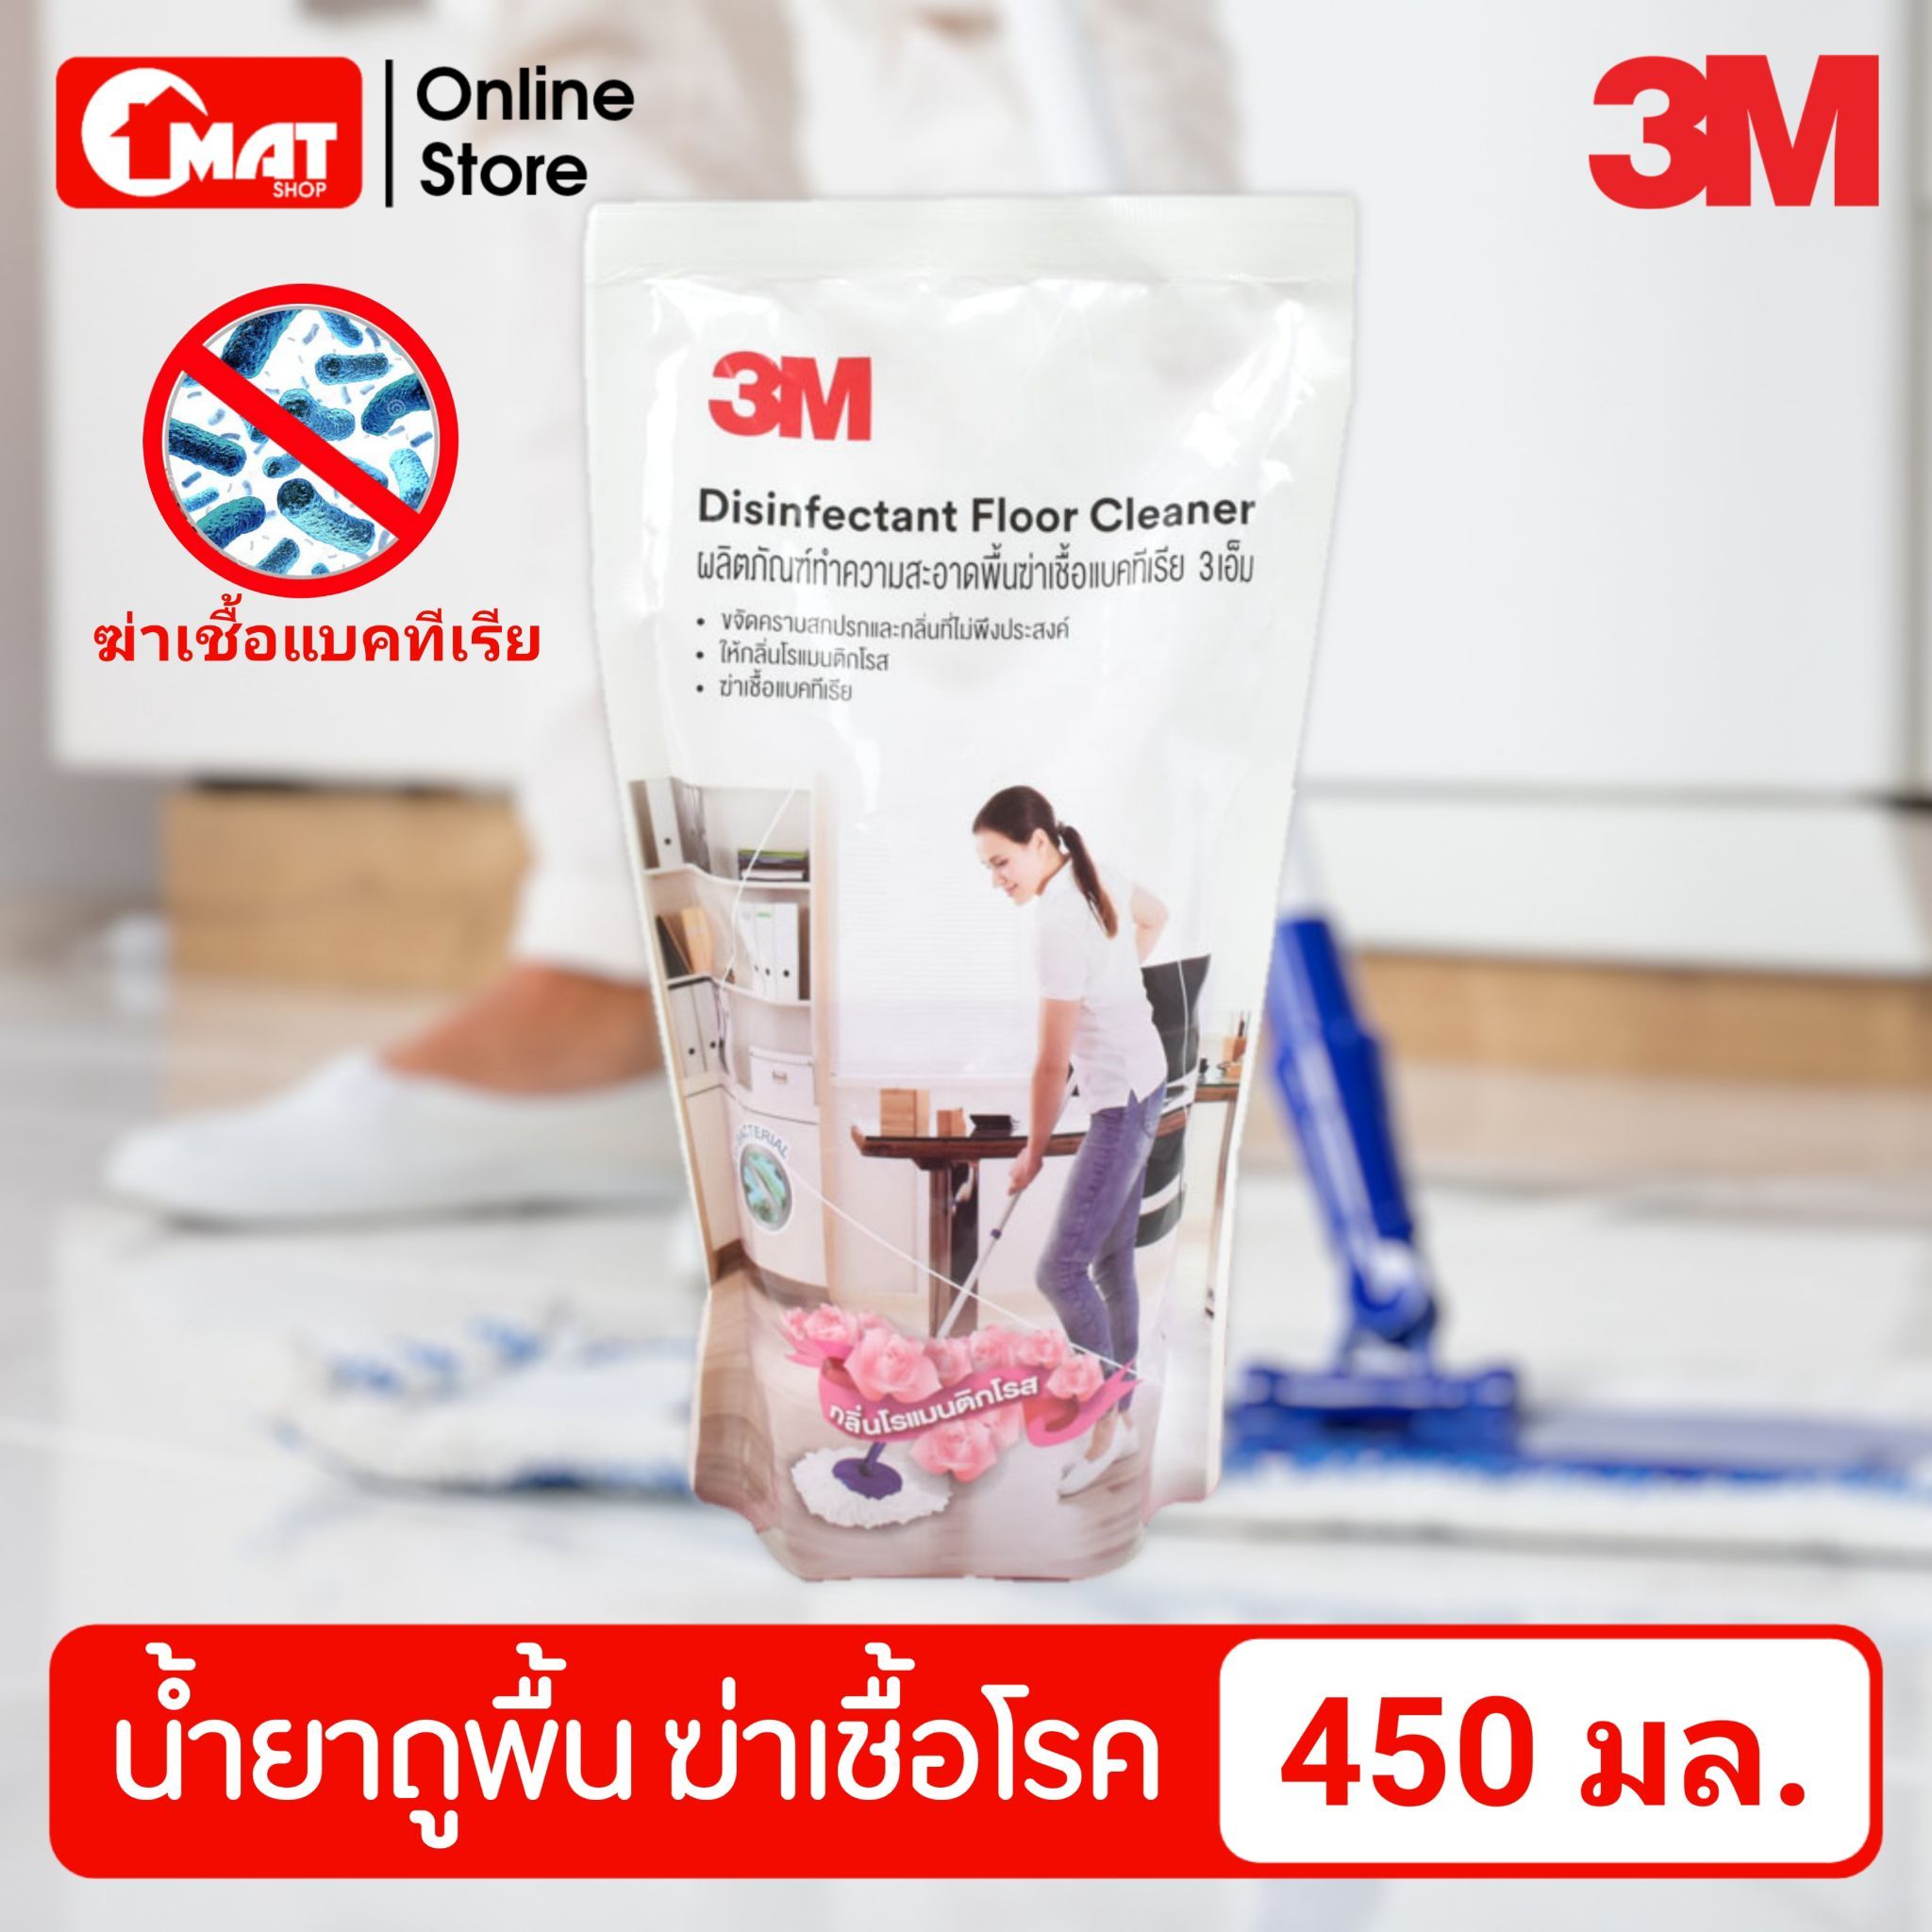 3M น้ำยาทำความสะอาดพื้นและฆ่าเชื้อแบคทีเรีย น้ำยาถูพื้น น้ำยาฆ่าเชื้อ กลิ่นโรแมนติกโรส 450มล. 3M Disinfectant Floor Cleaner,Romantic Rose 450ml.